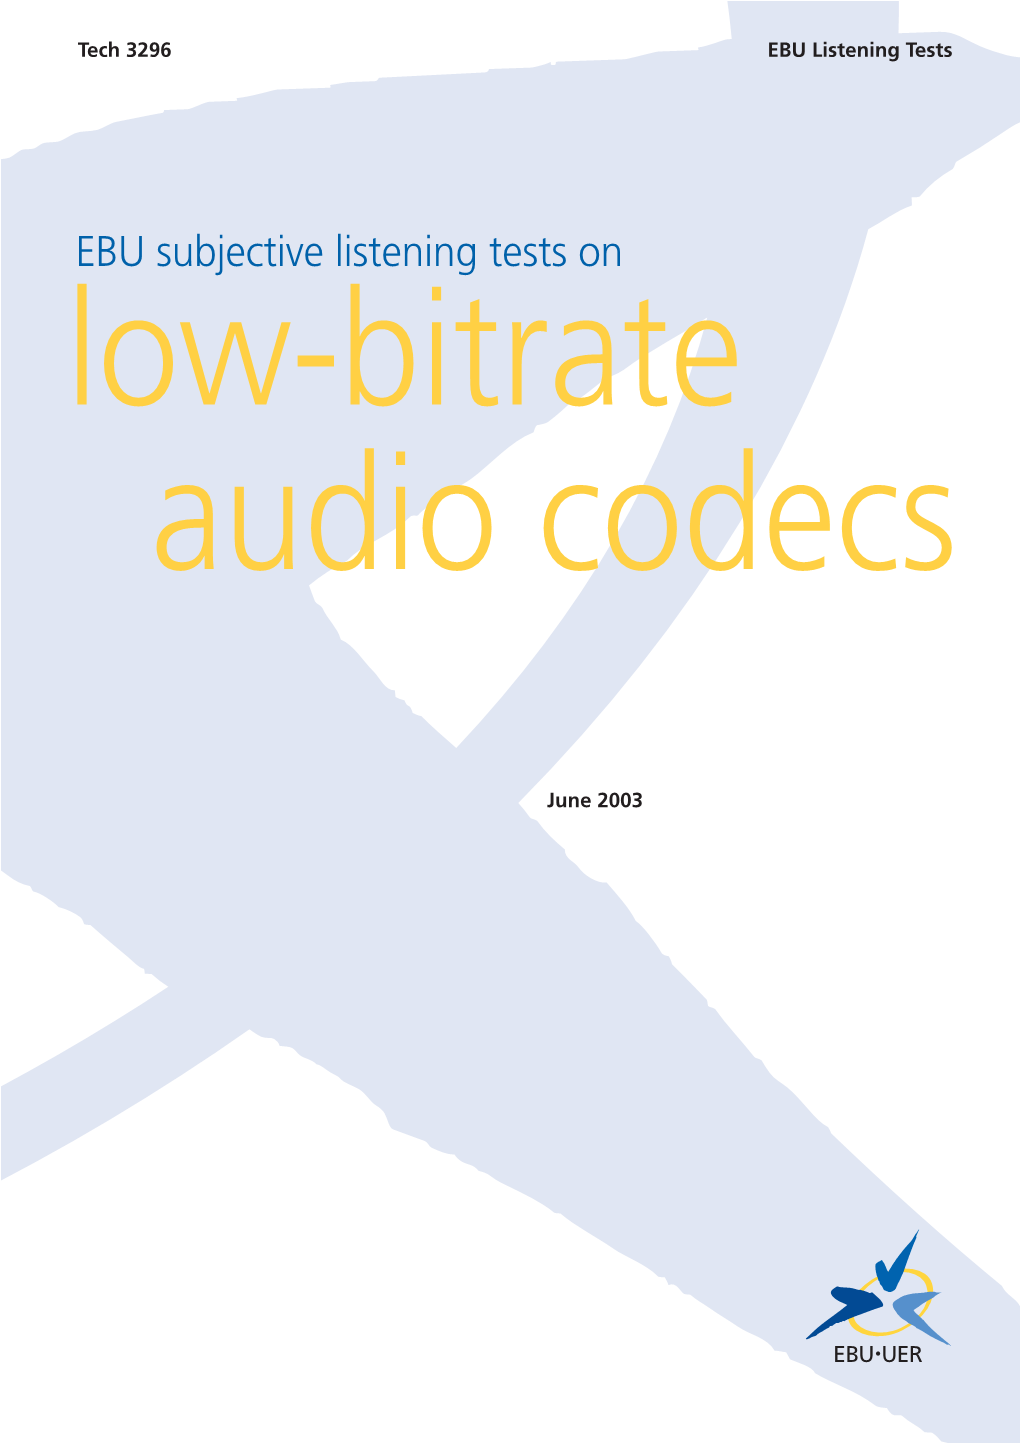 EBU Subjective Listening Tests on Low-Bitrate Audio Codecs